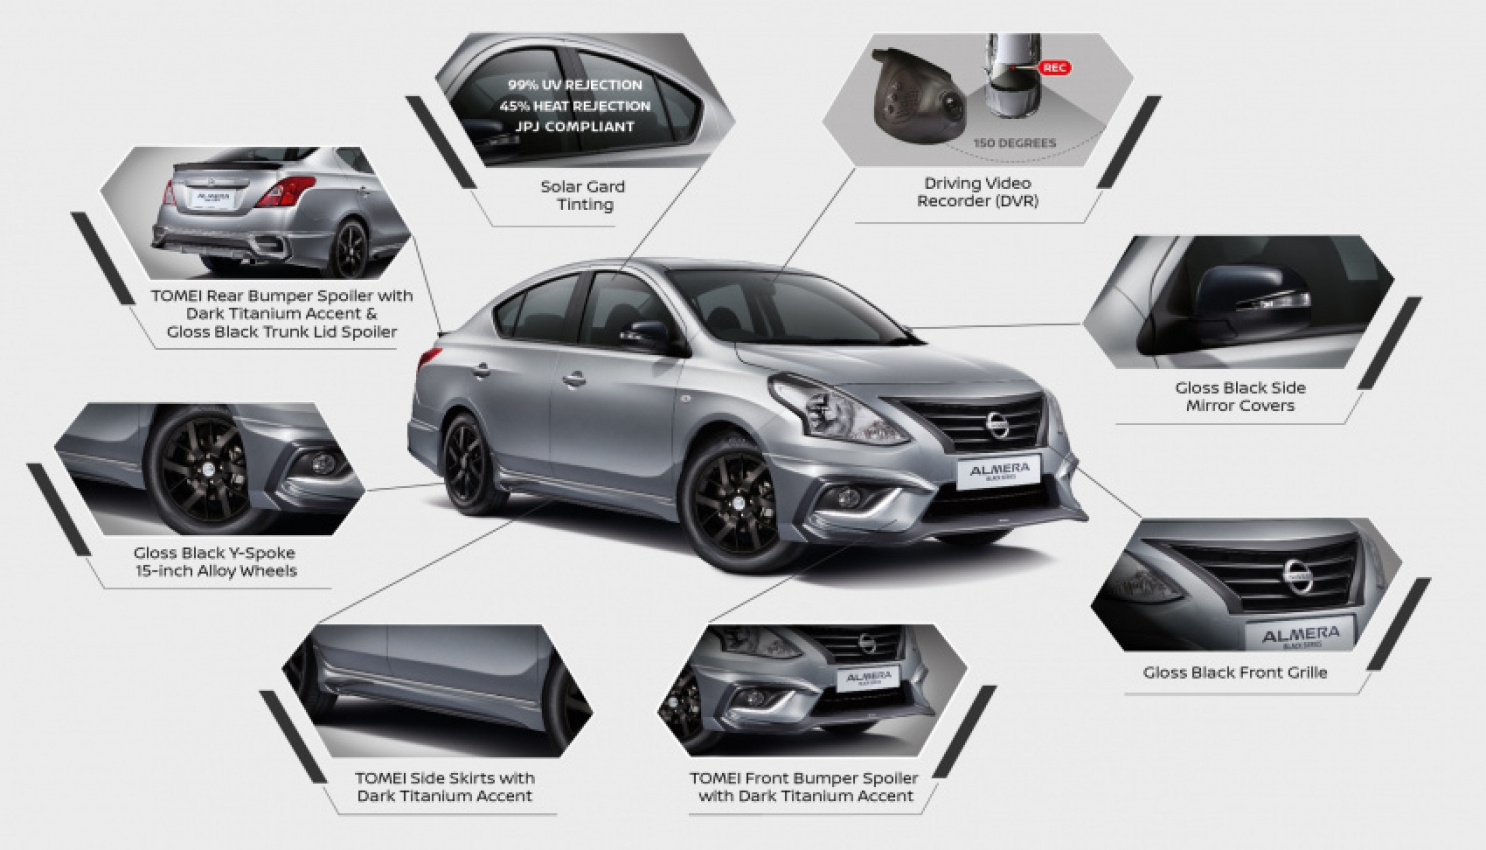 autos, cars, nissan, edaran tan chong motor, etcm malaysia, nissan almera, nissan almera black series, nissan malaysia, android, etcm introduces nissan almera 1.5 “black series” priced below rm70,000 + roadshows announced!